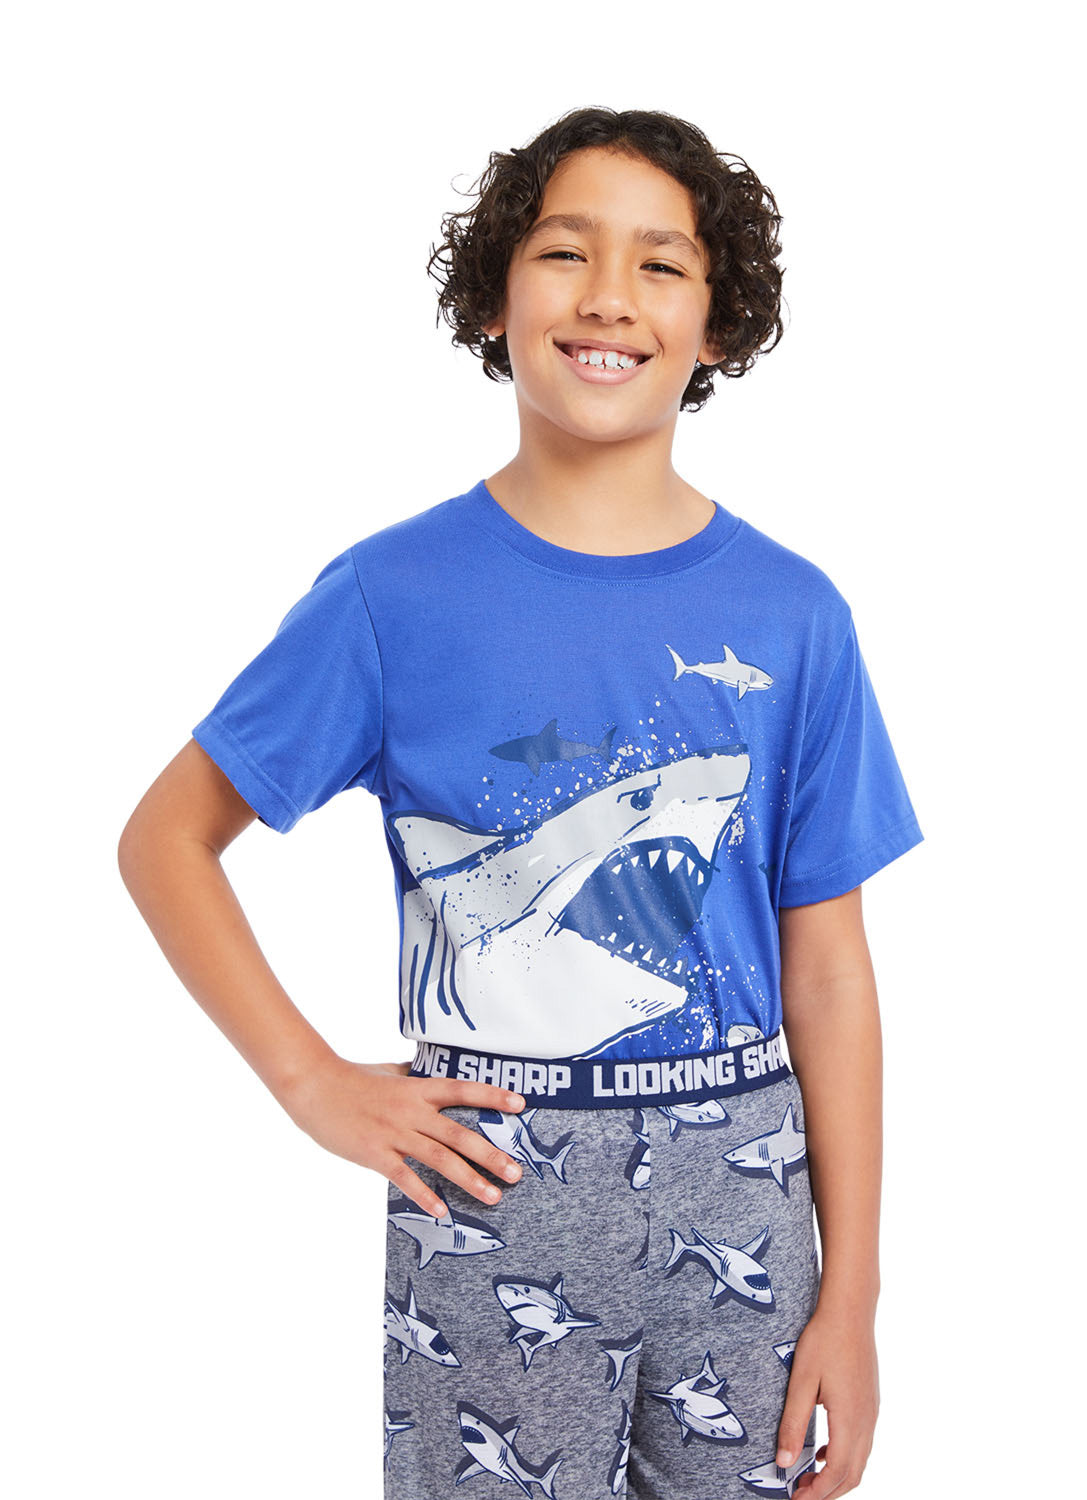 Detail Boy wearing Shark t-shirt print with sharks print shorts